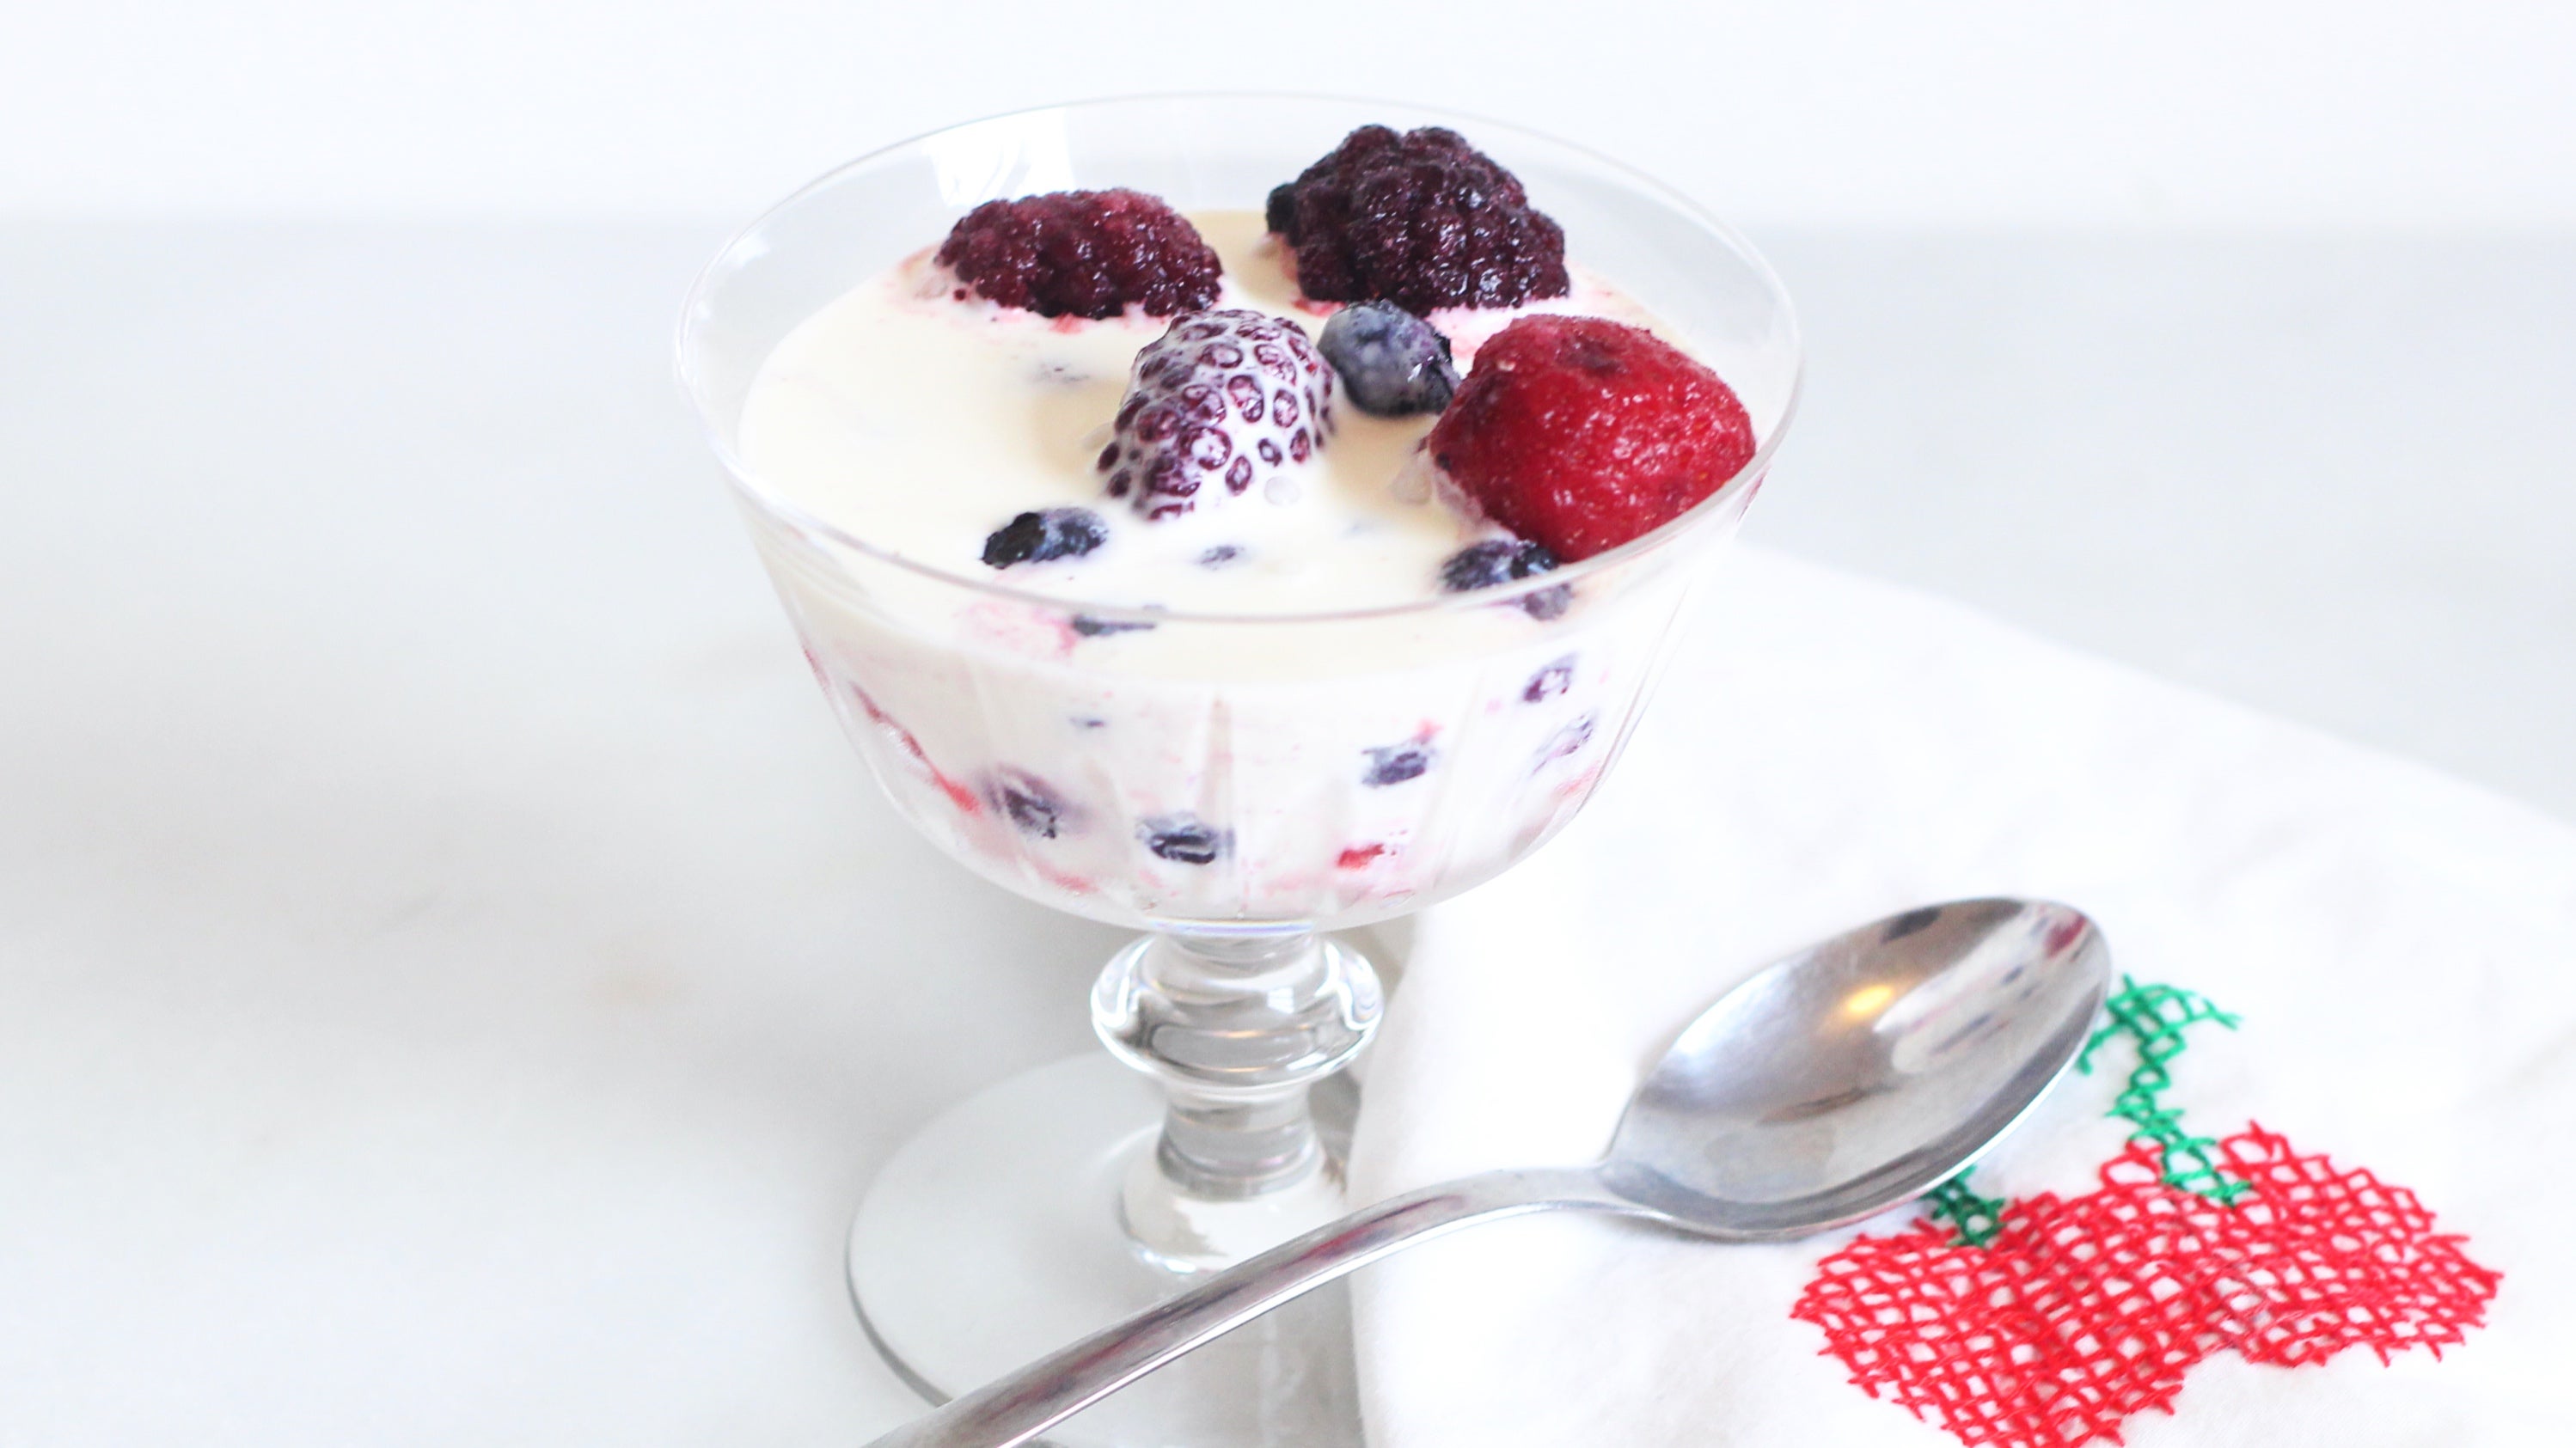 Frozen Berries And Cream Is A Perfect Quarantine Dessert